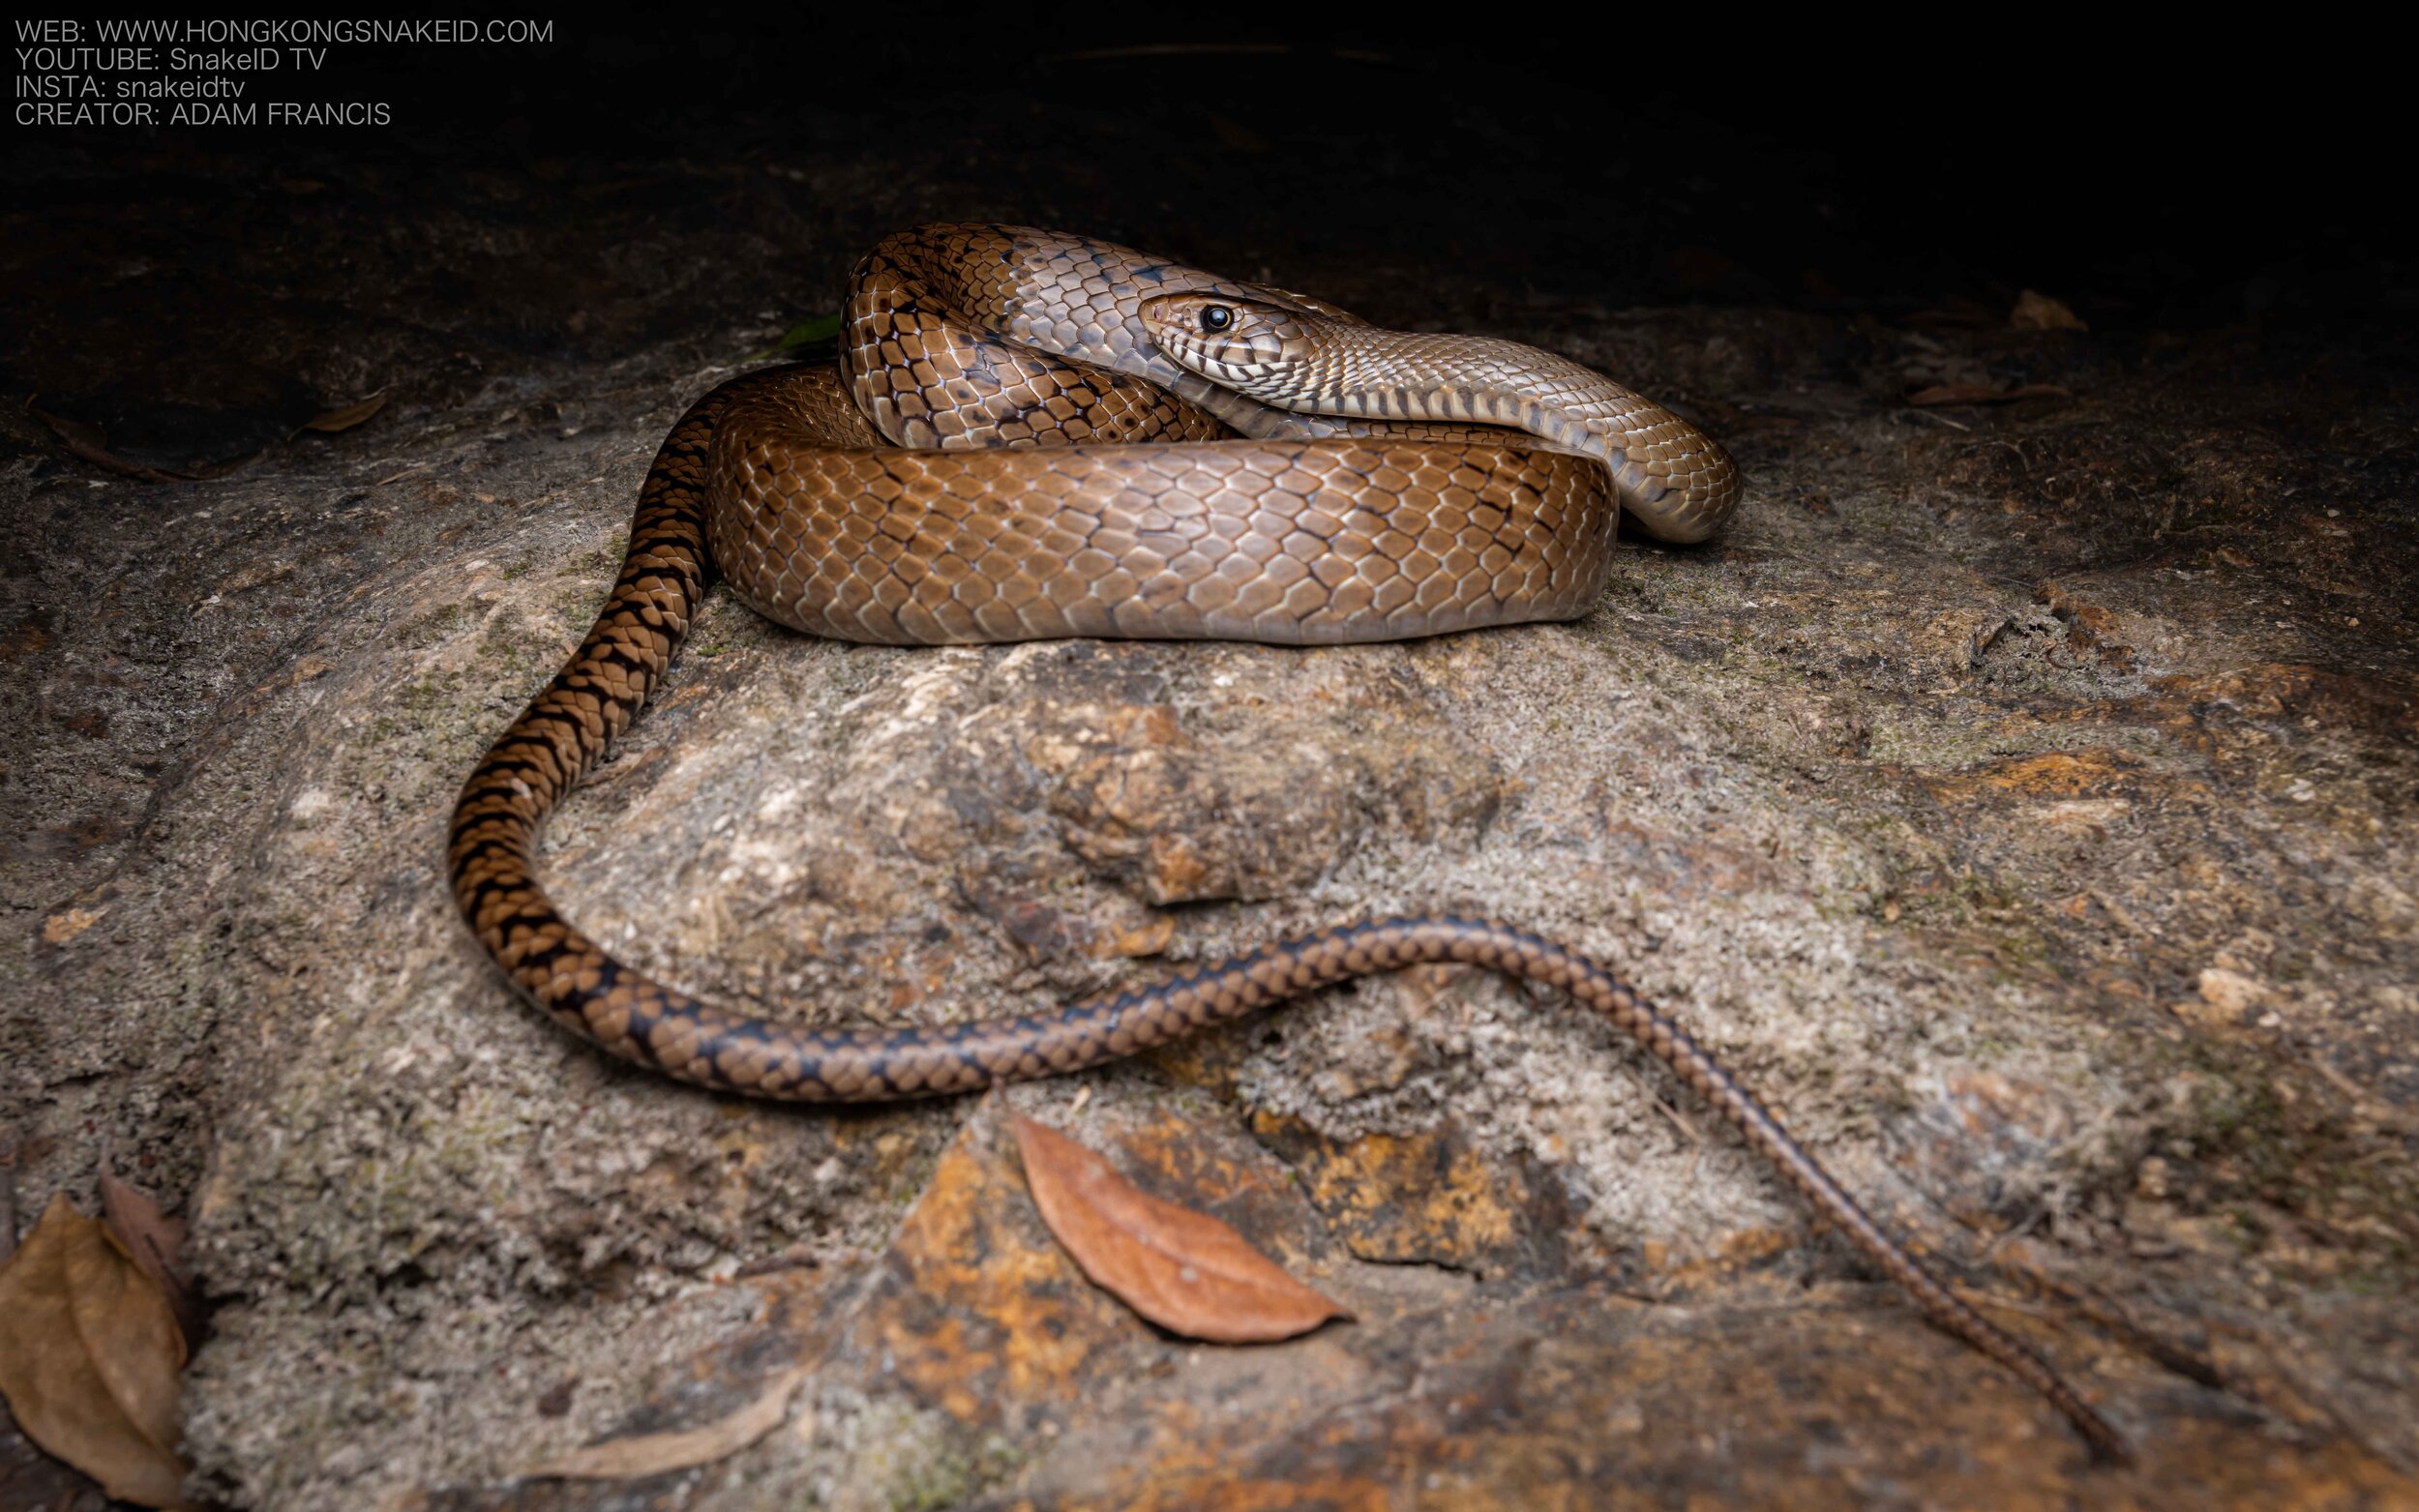 Common Rat Snake - Ptyas mucosus